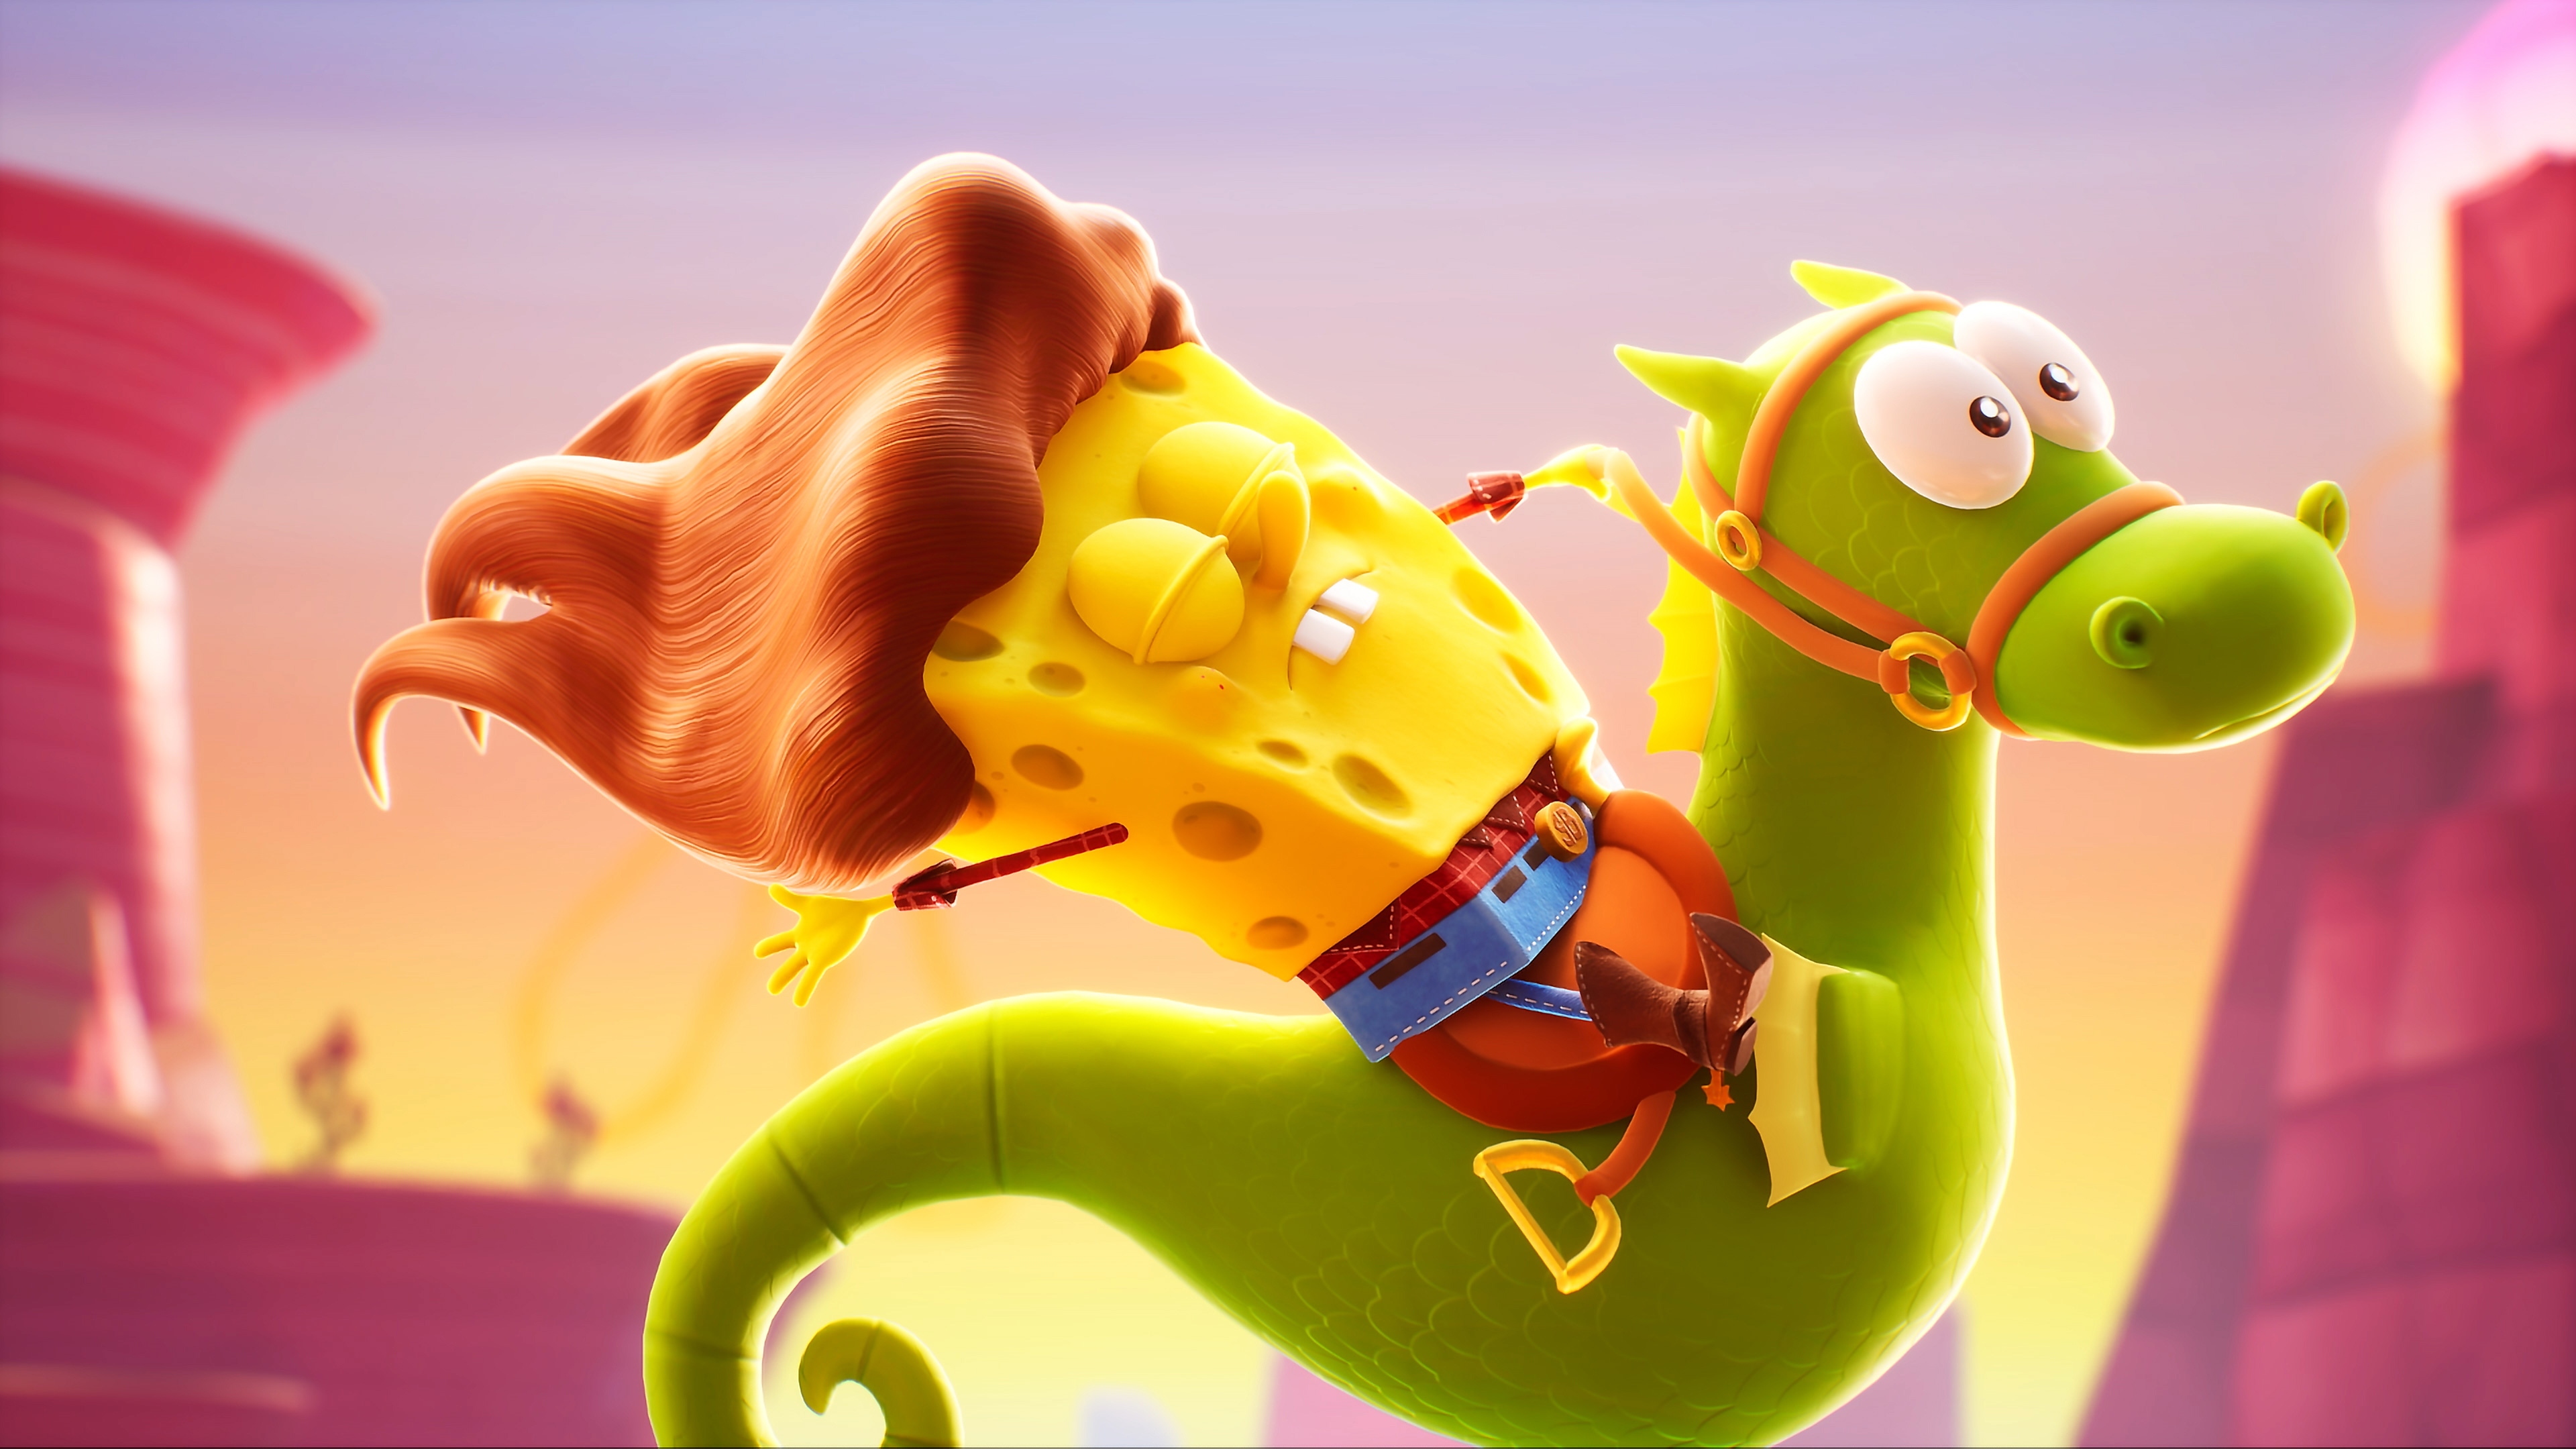 SpongeBob SquarePants: The Cosmic Shake – снимок экрана | PS4, PS5